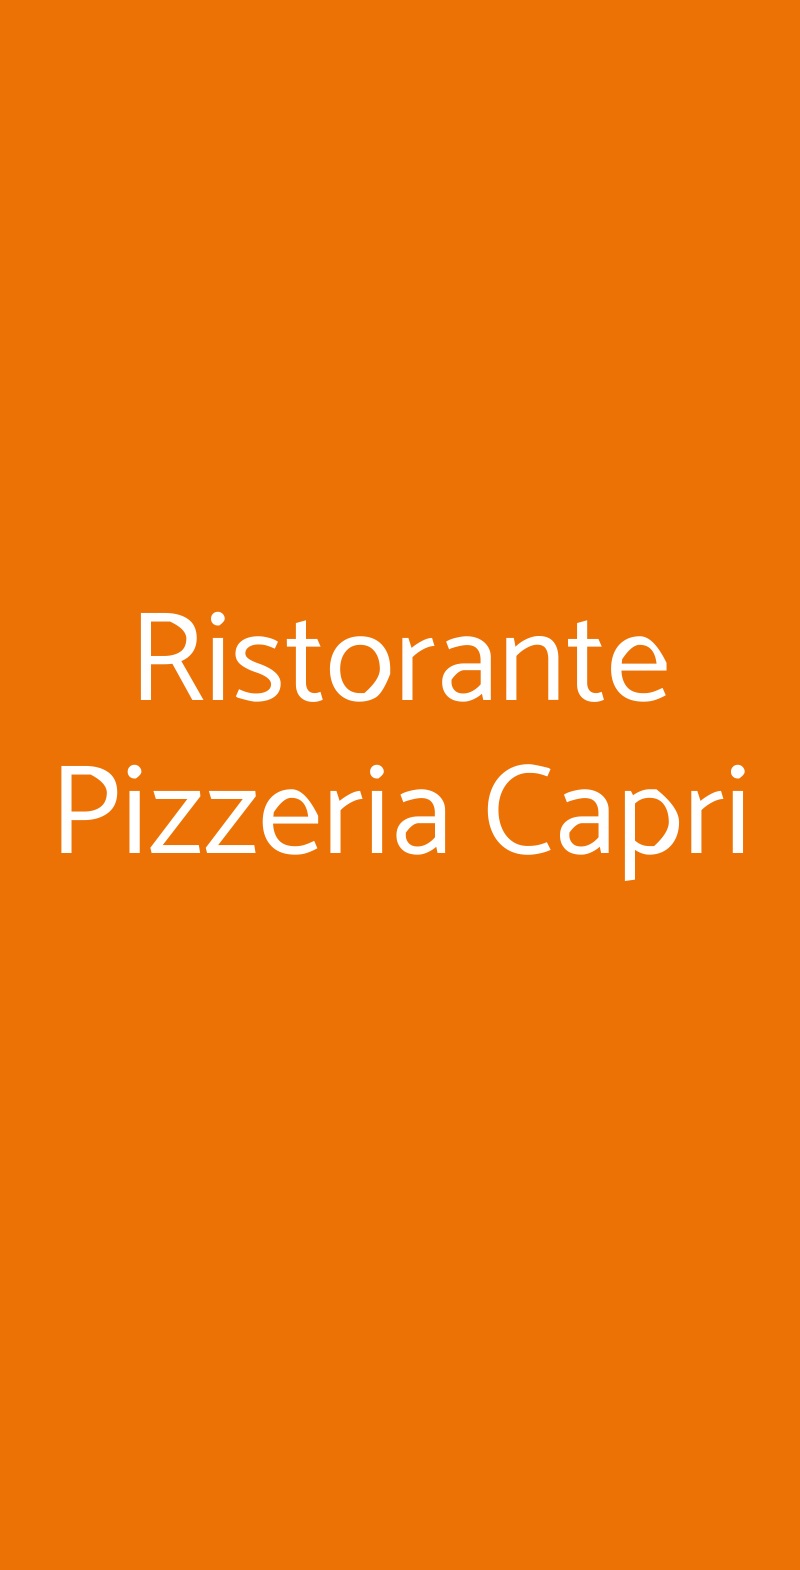 Ristorante Pizzeria Capri Caorle menù 1 pagina